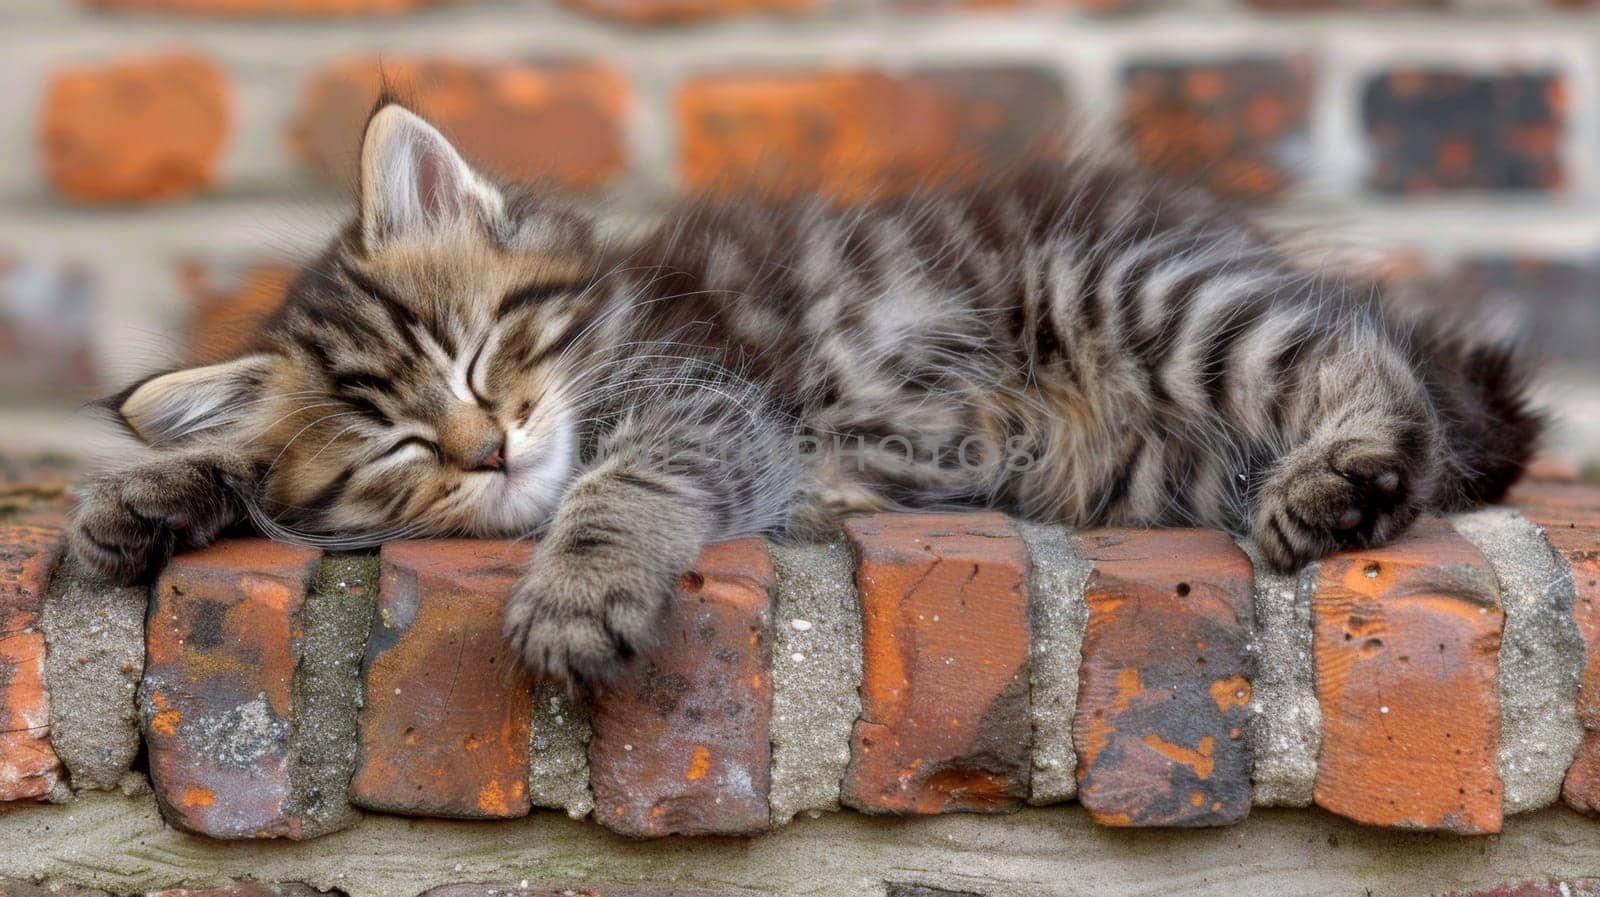 A small kitten sleeping on a brick wall with bricks around it